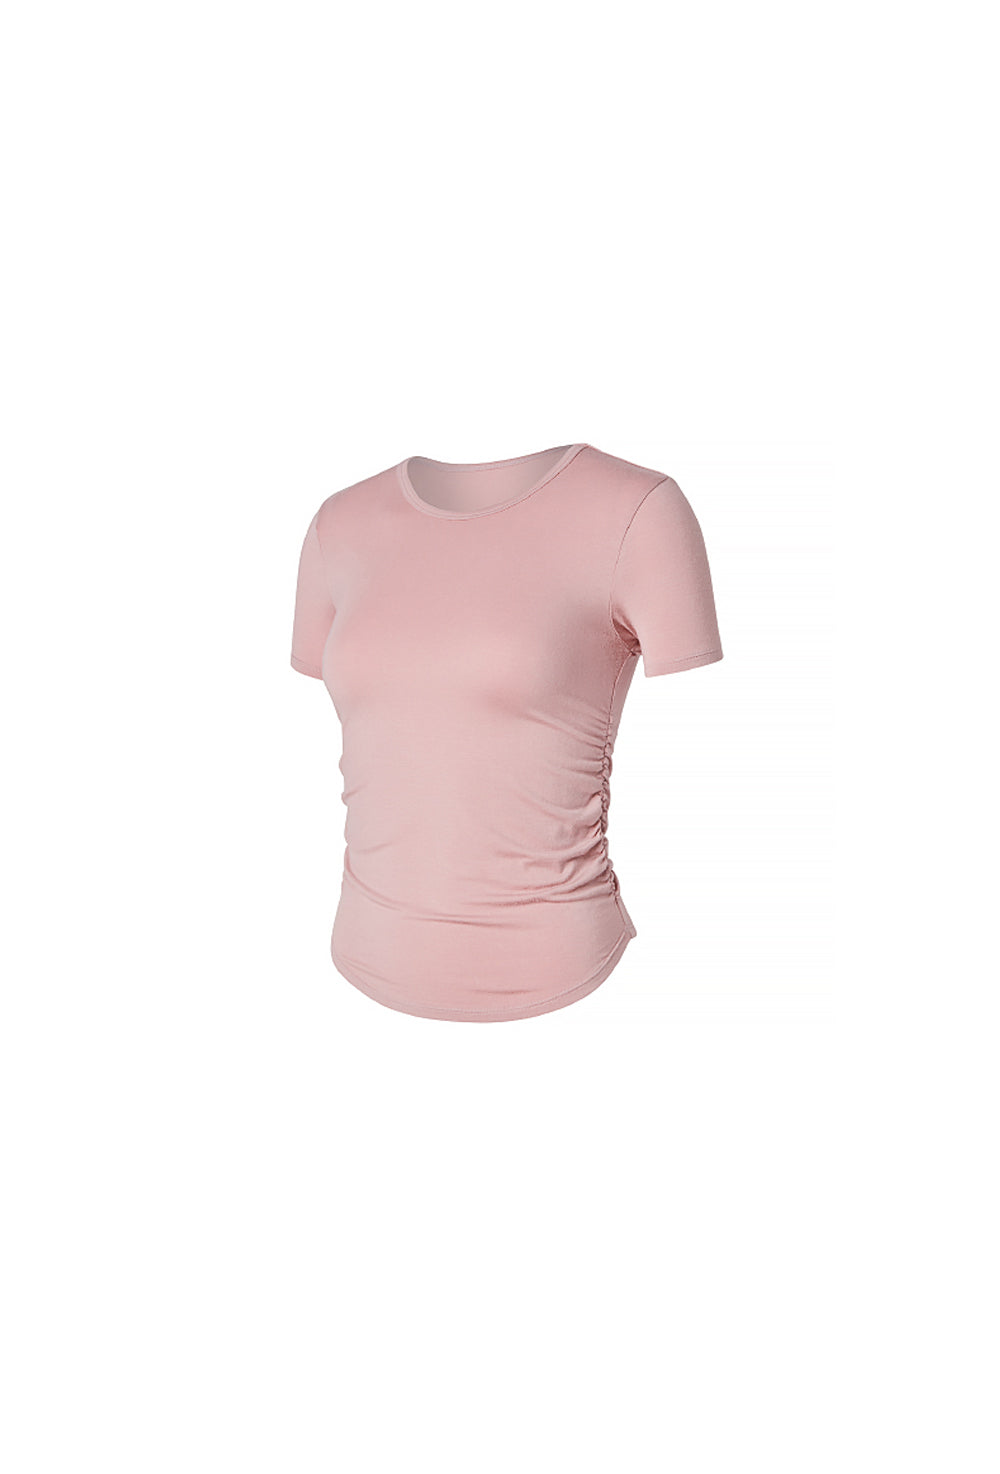 Side Shirring Short Sleeve - Creamy Rose